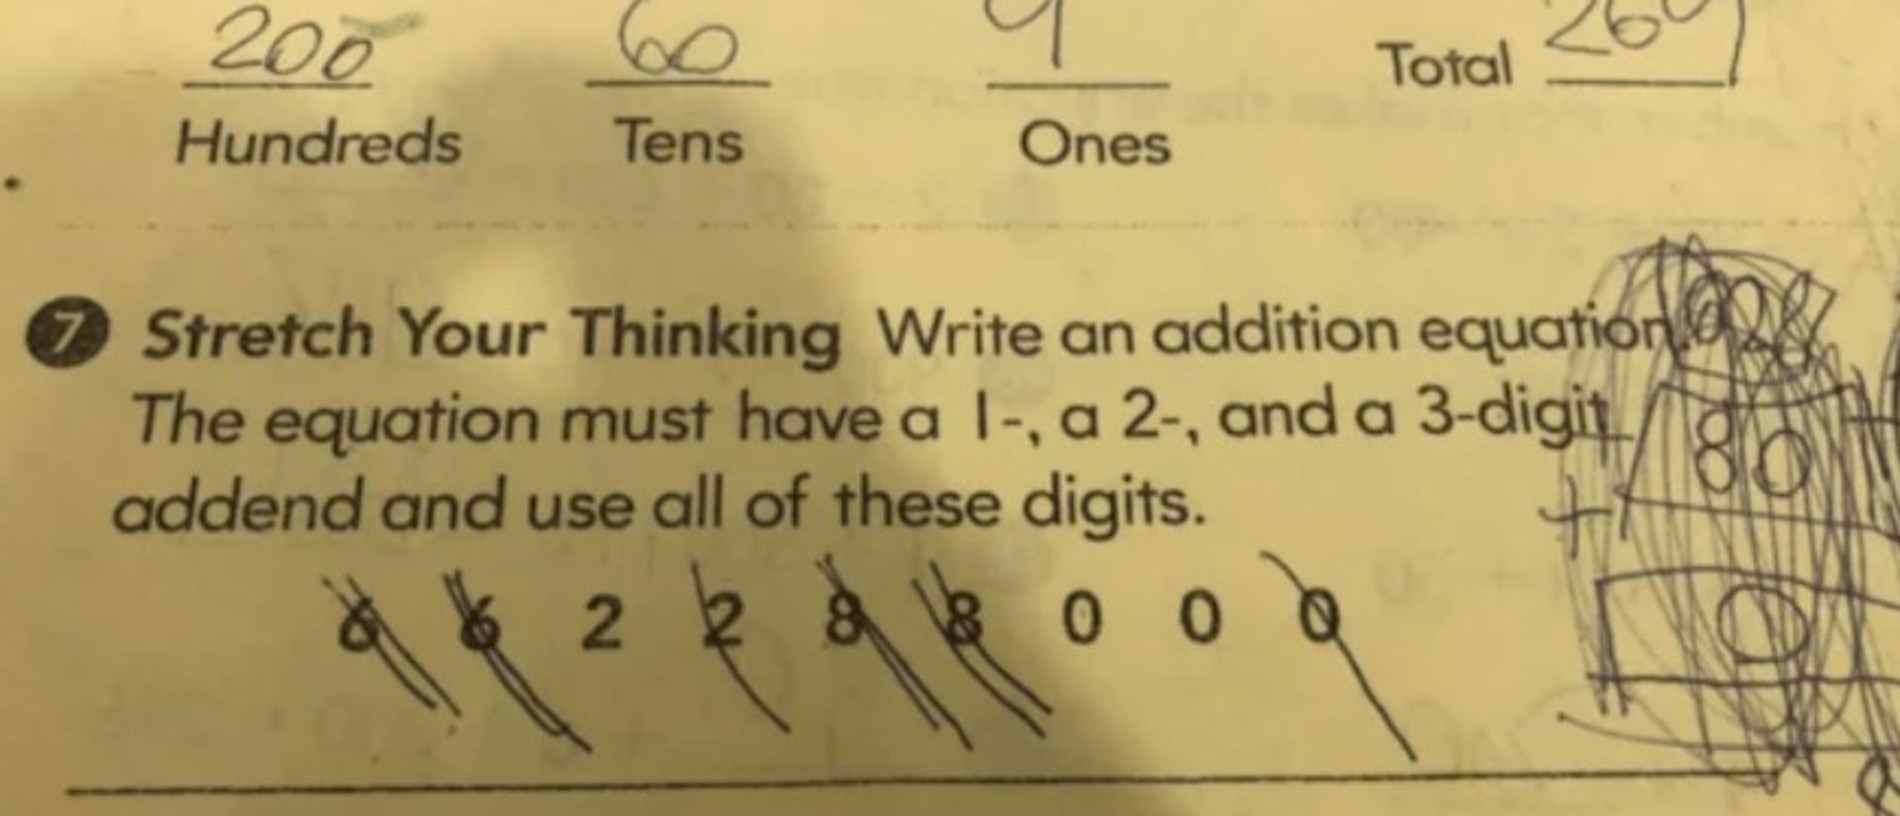 Maths question stumps adults. Picture: Reddit